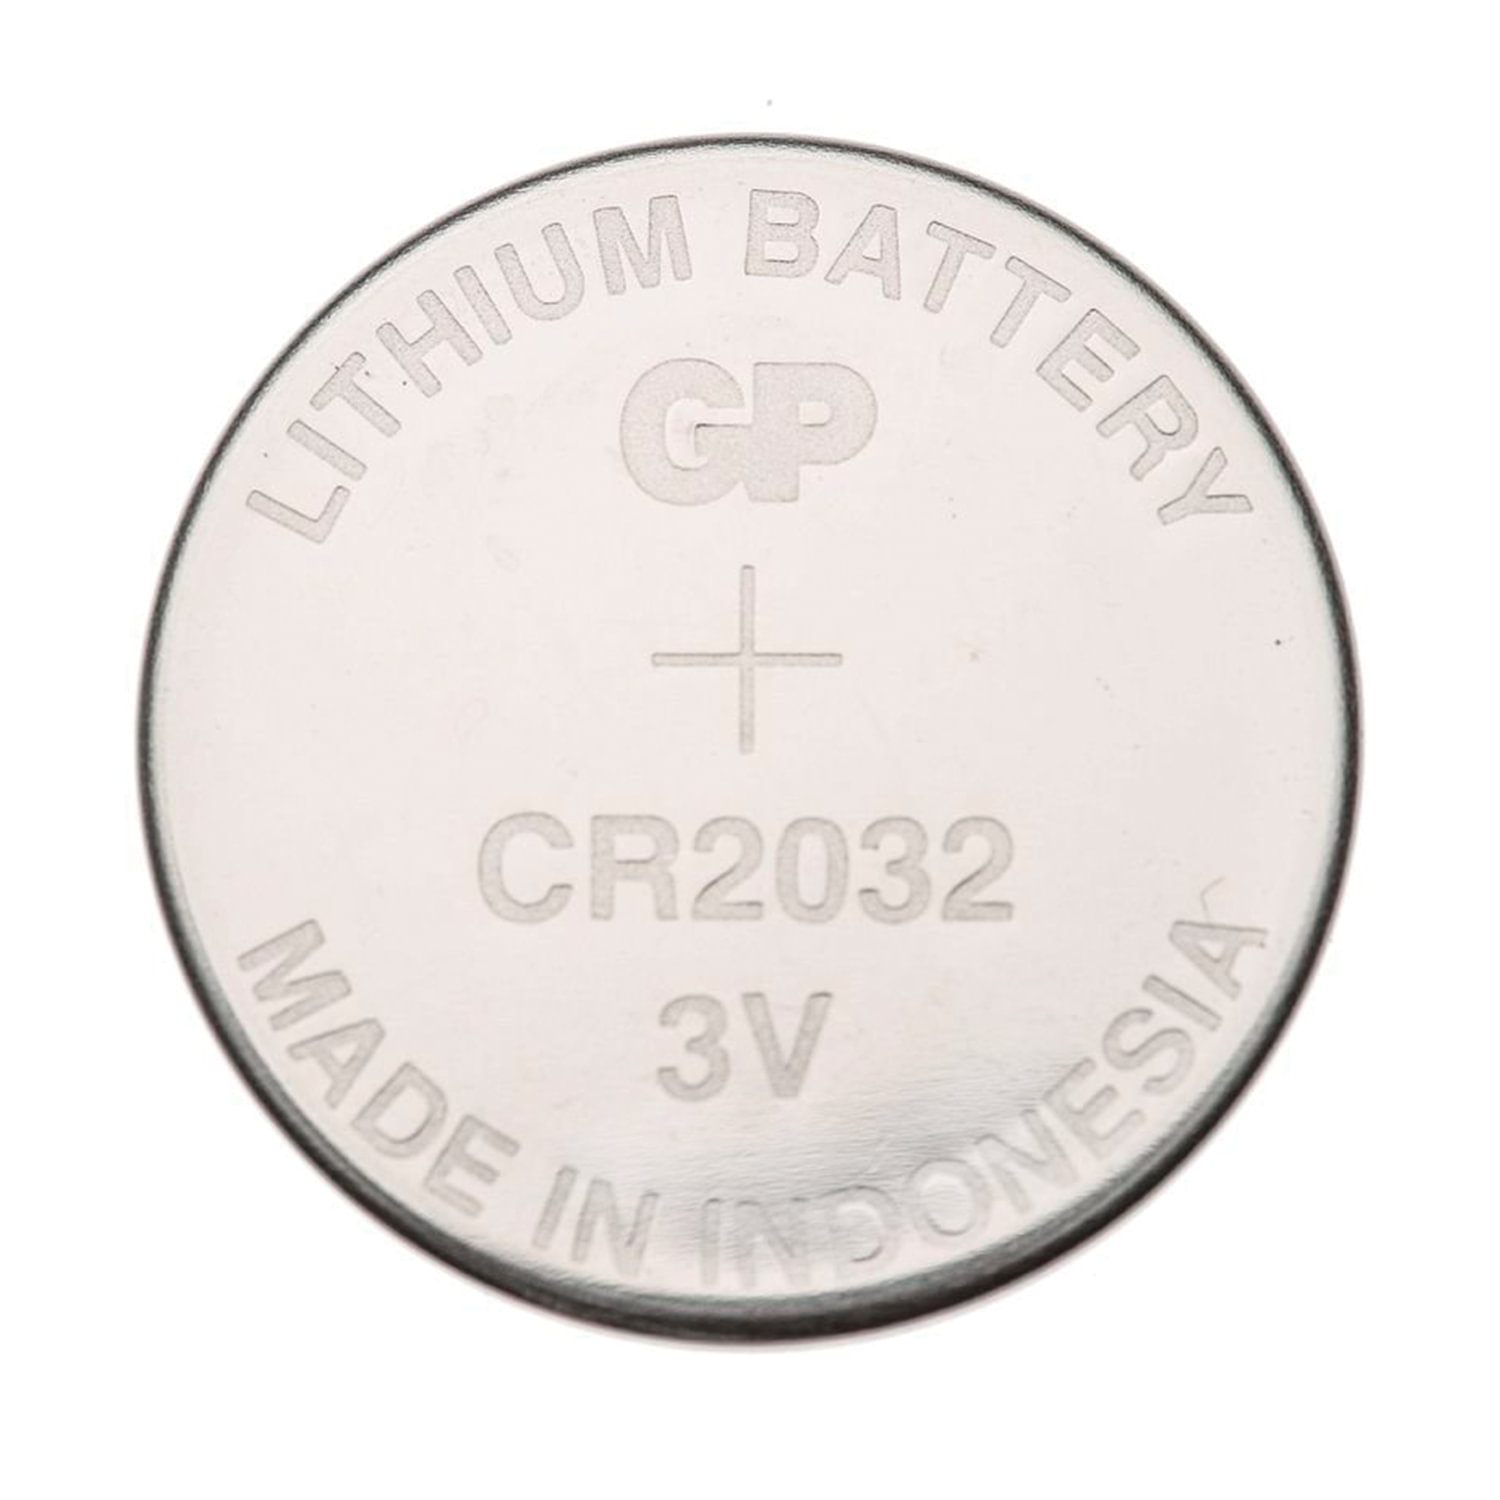 Cr2032 batteries. Батарейка GP cr2032 батарея 3v. Батарейка литиевая cr2032. Батарейки GP Lithium cr2032 1шт. Батарейка GP cr2032 1 шт..